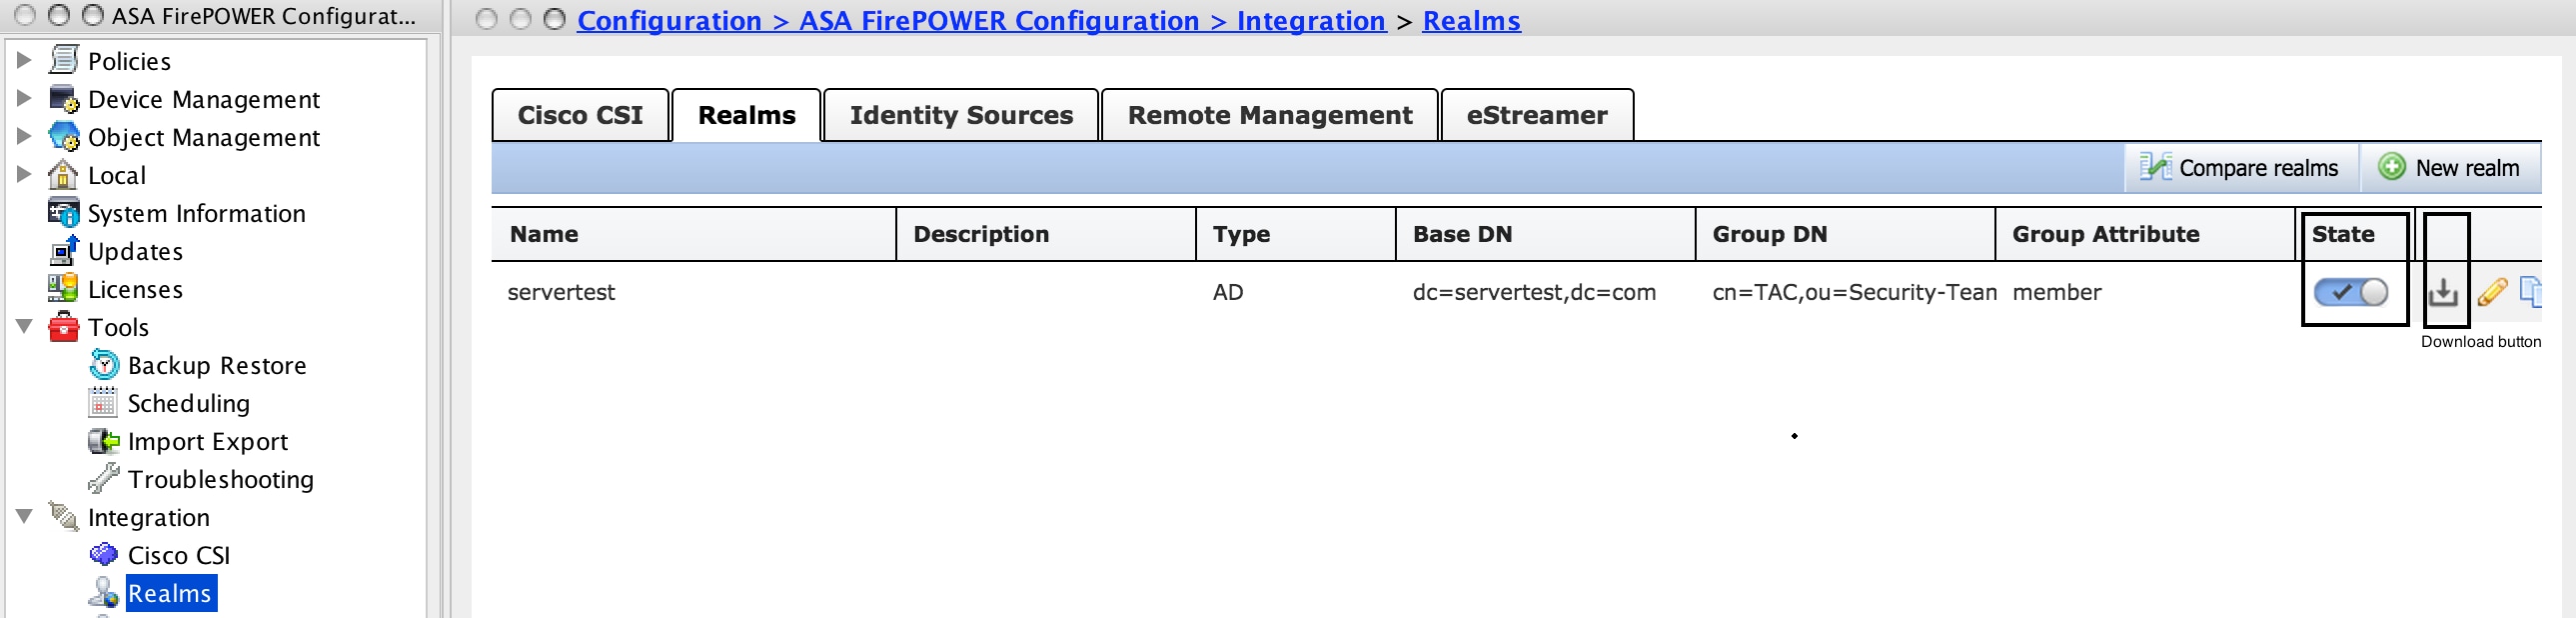 200566-Configure-Active-Directory-Integration-w-04.png